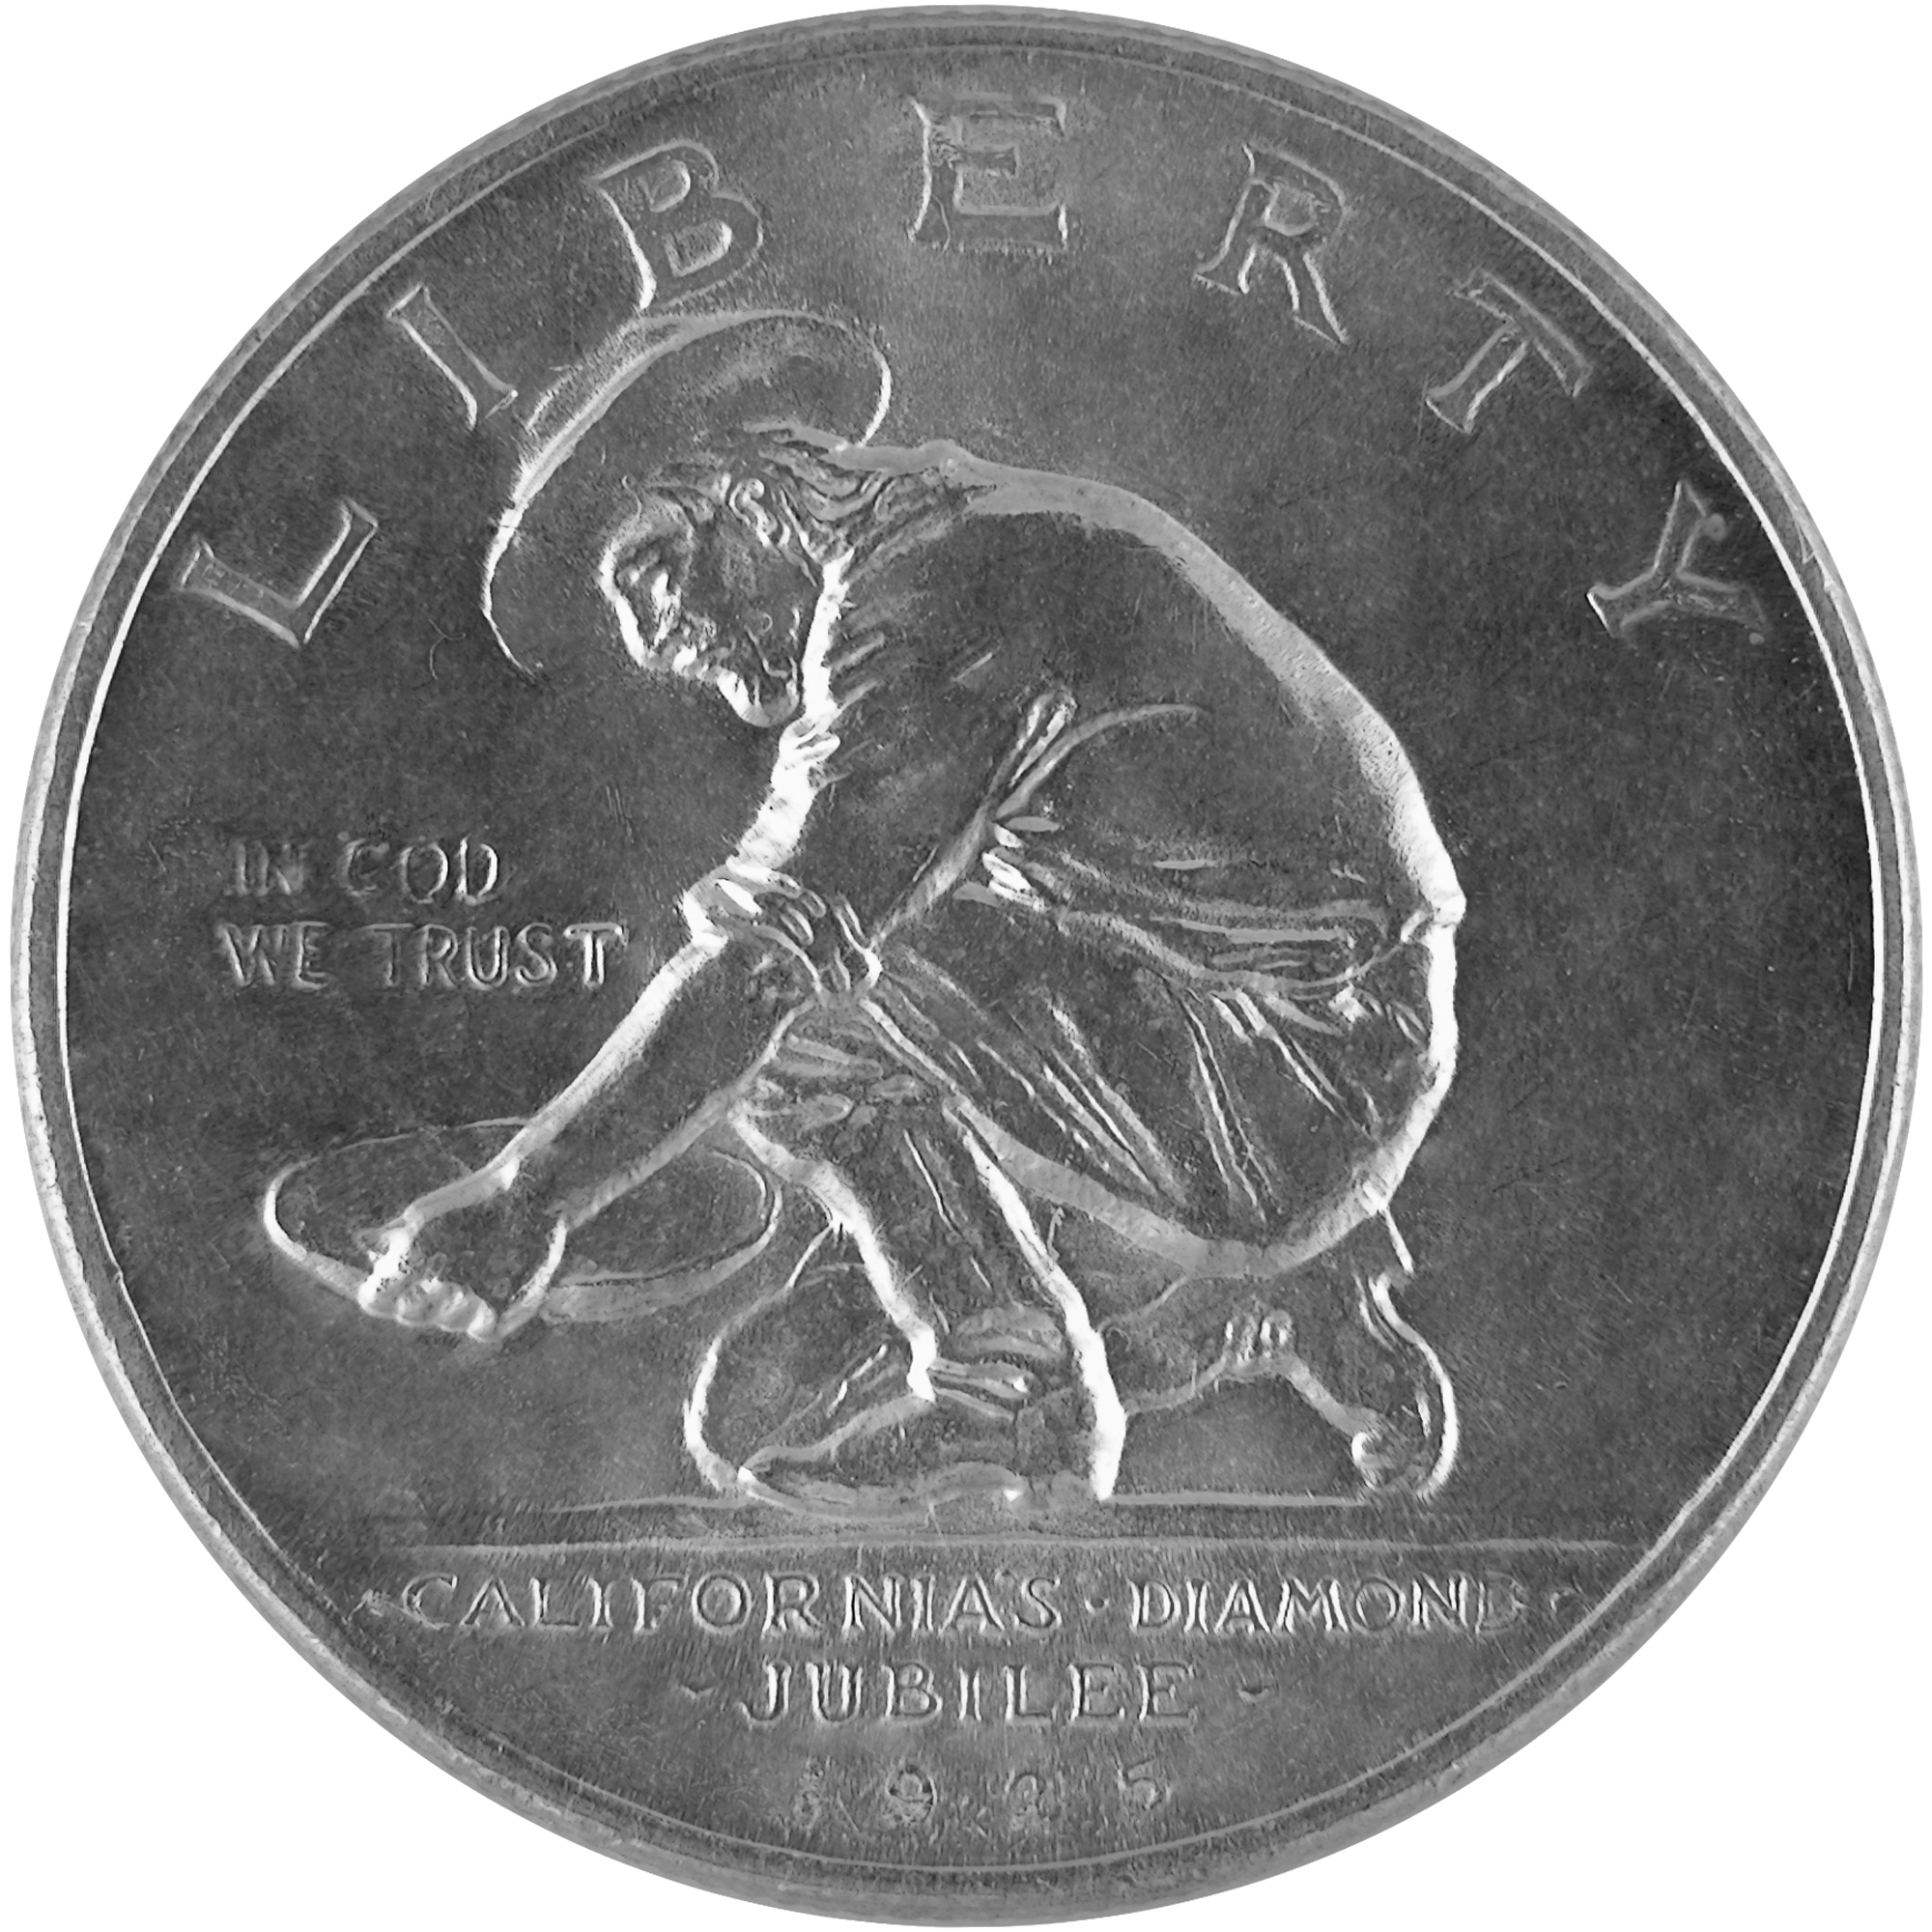 1925 California Damond Jubilee Commemorative Silver Half Dollar Coin Obverse